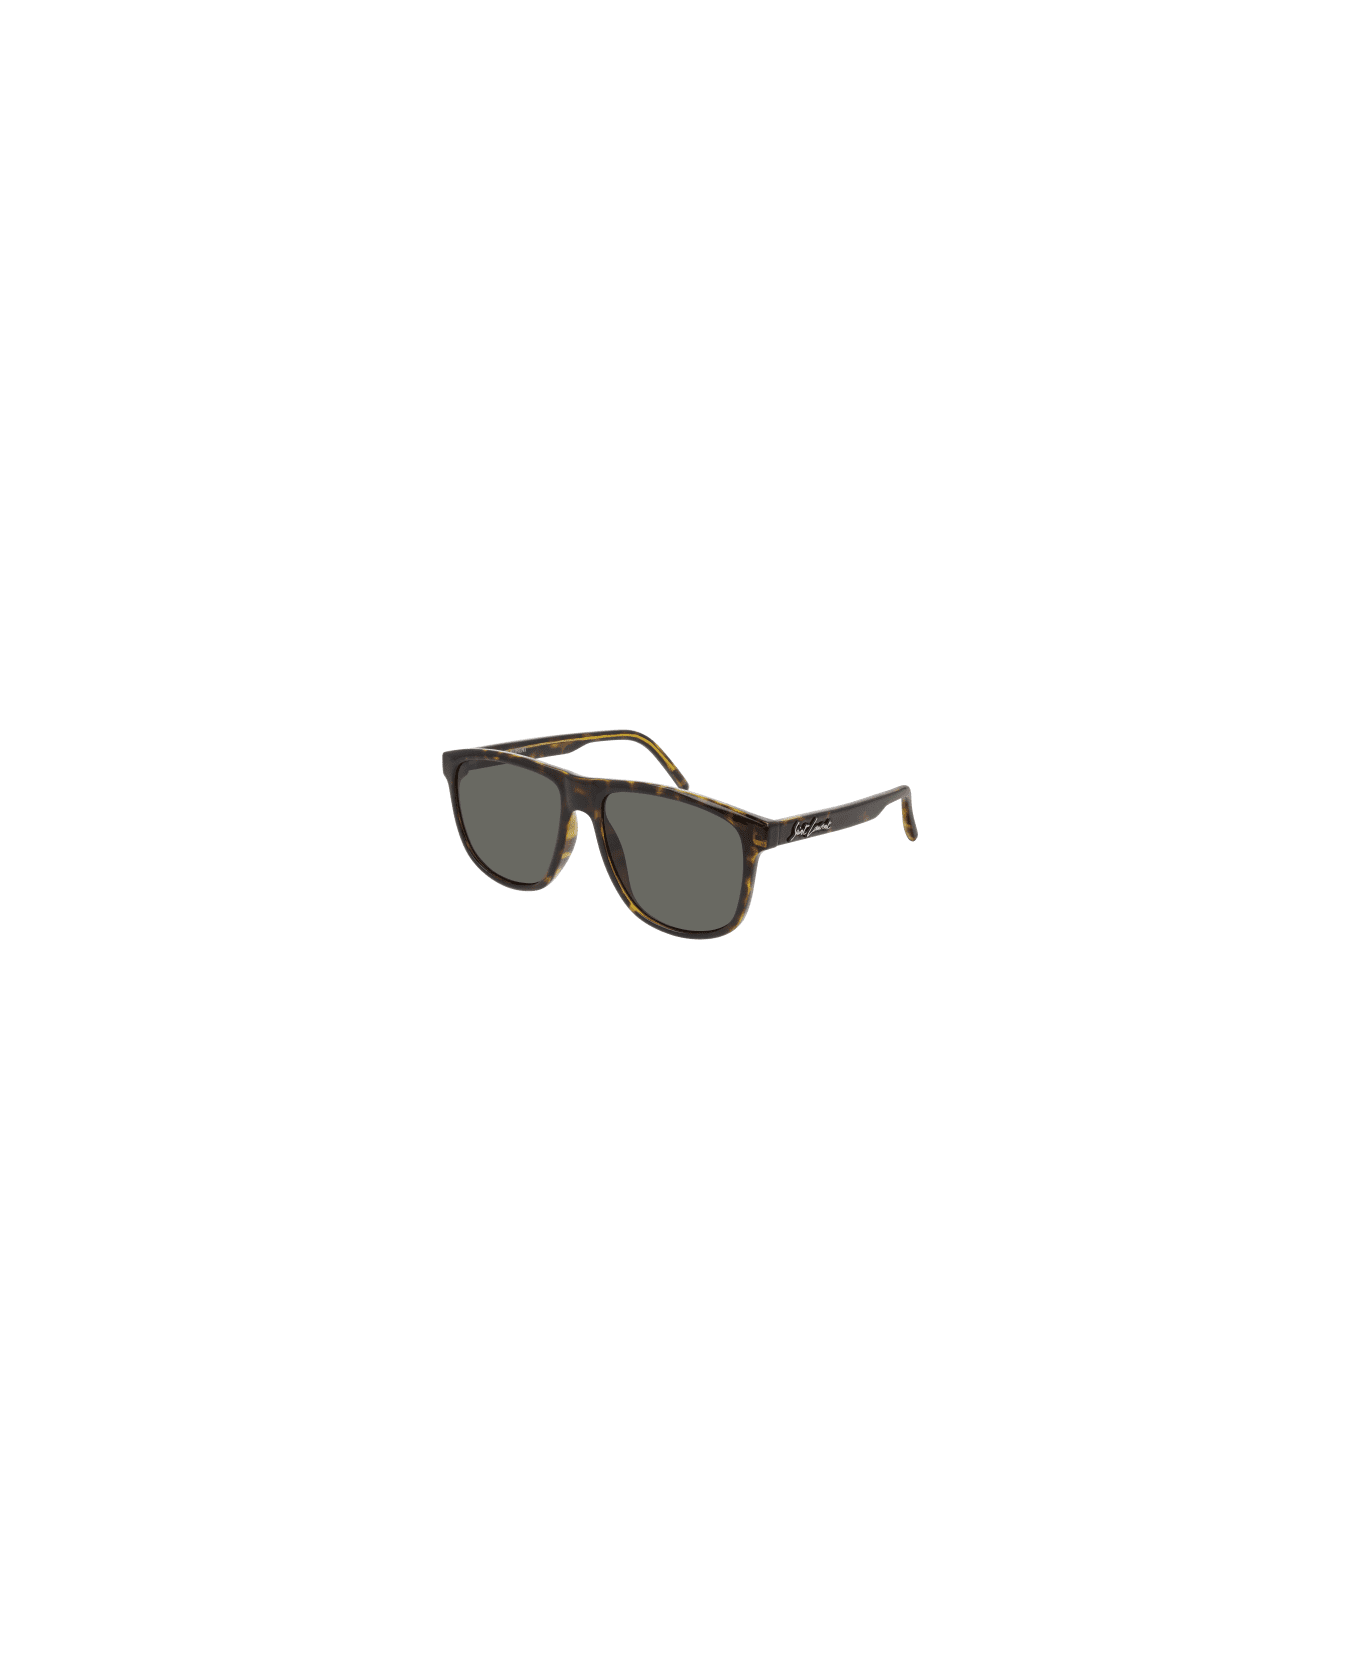 Saint Laurent Eyewear SL 334 Sunglasses - Havana Havana Grey